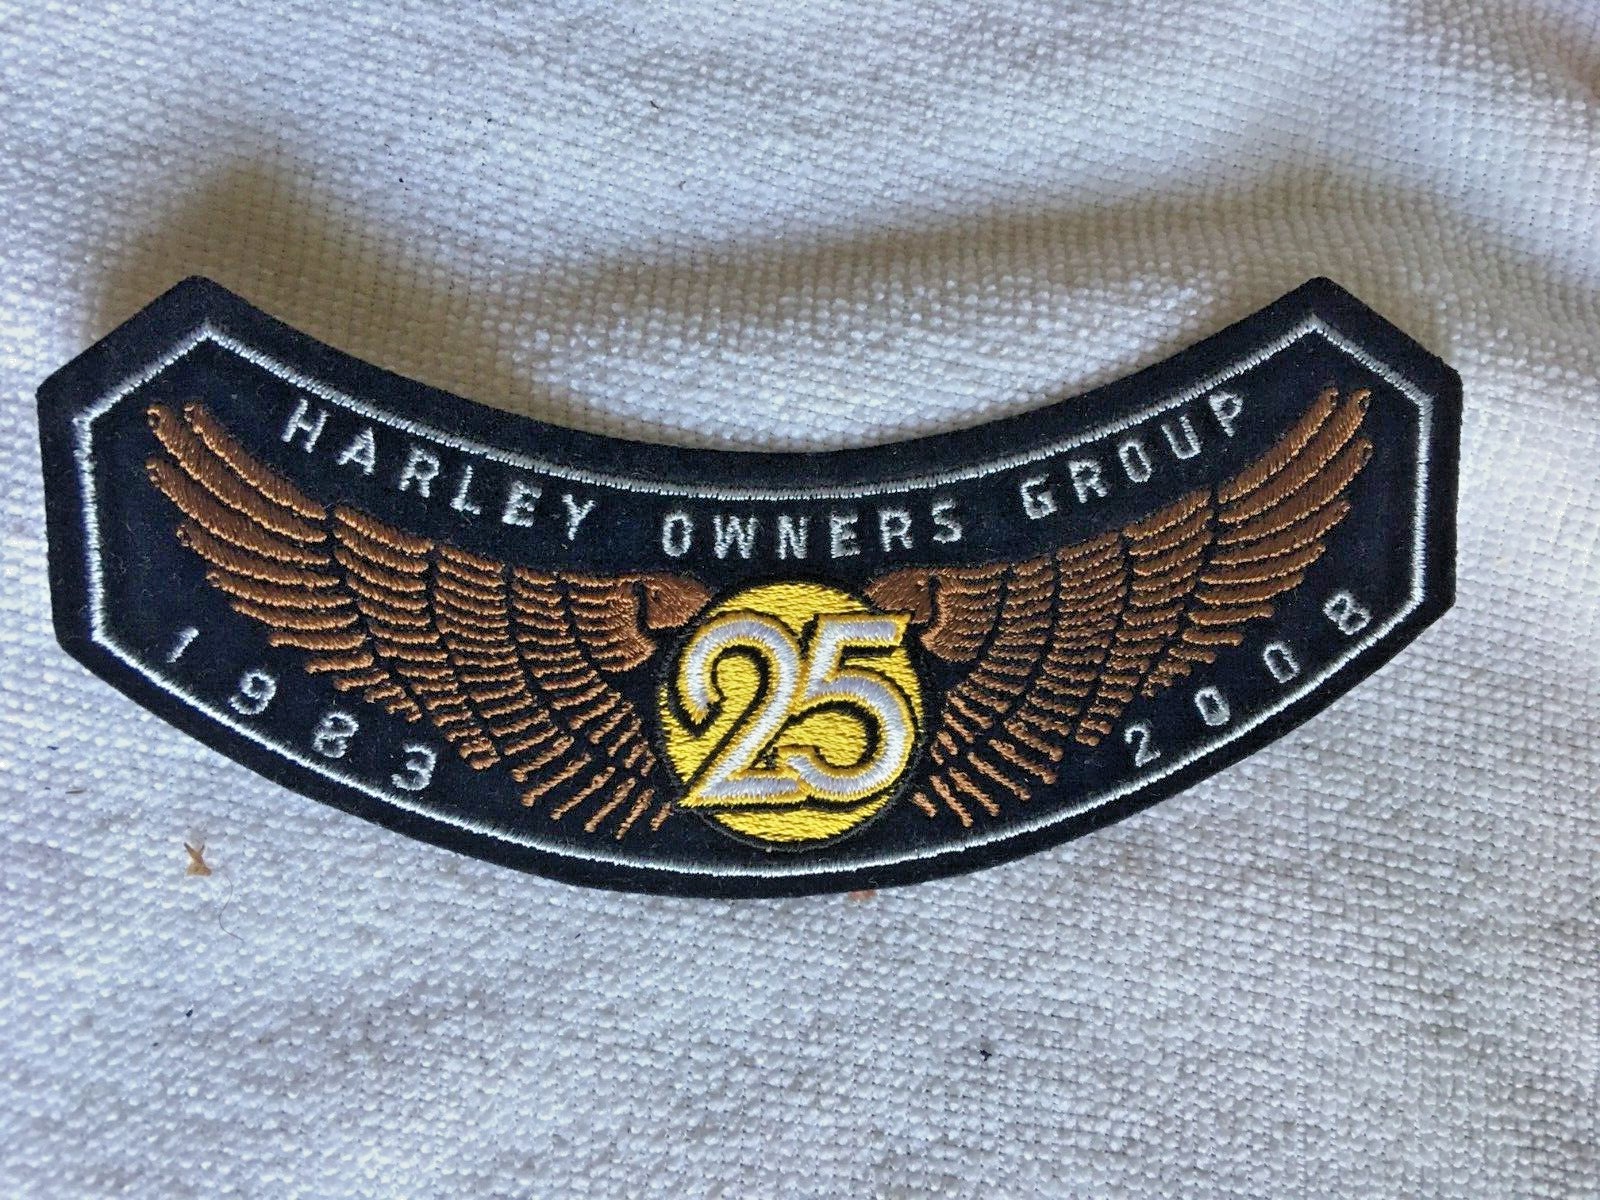 New 2008 HOG Harley Davidson Owners Group Rocker Patch 